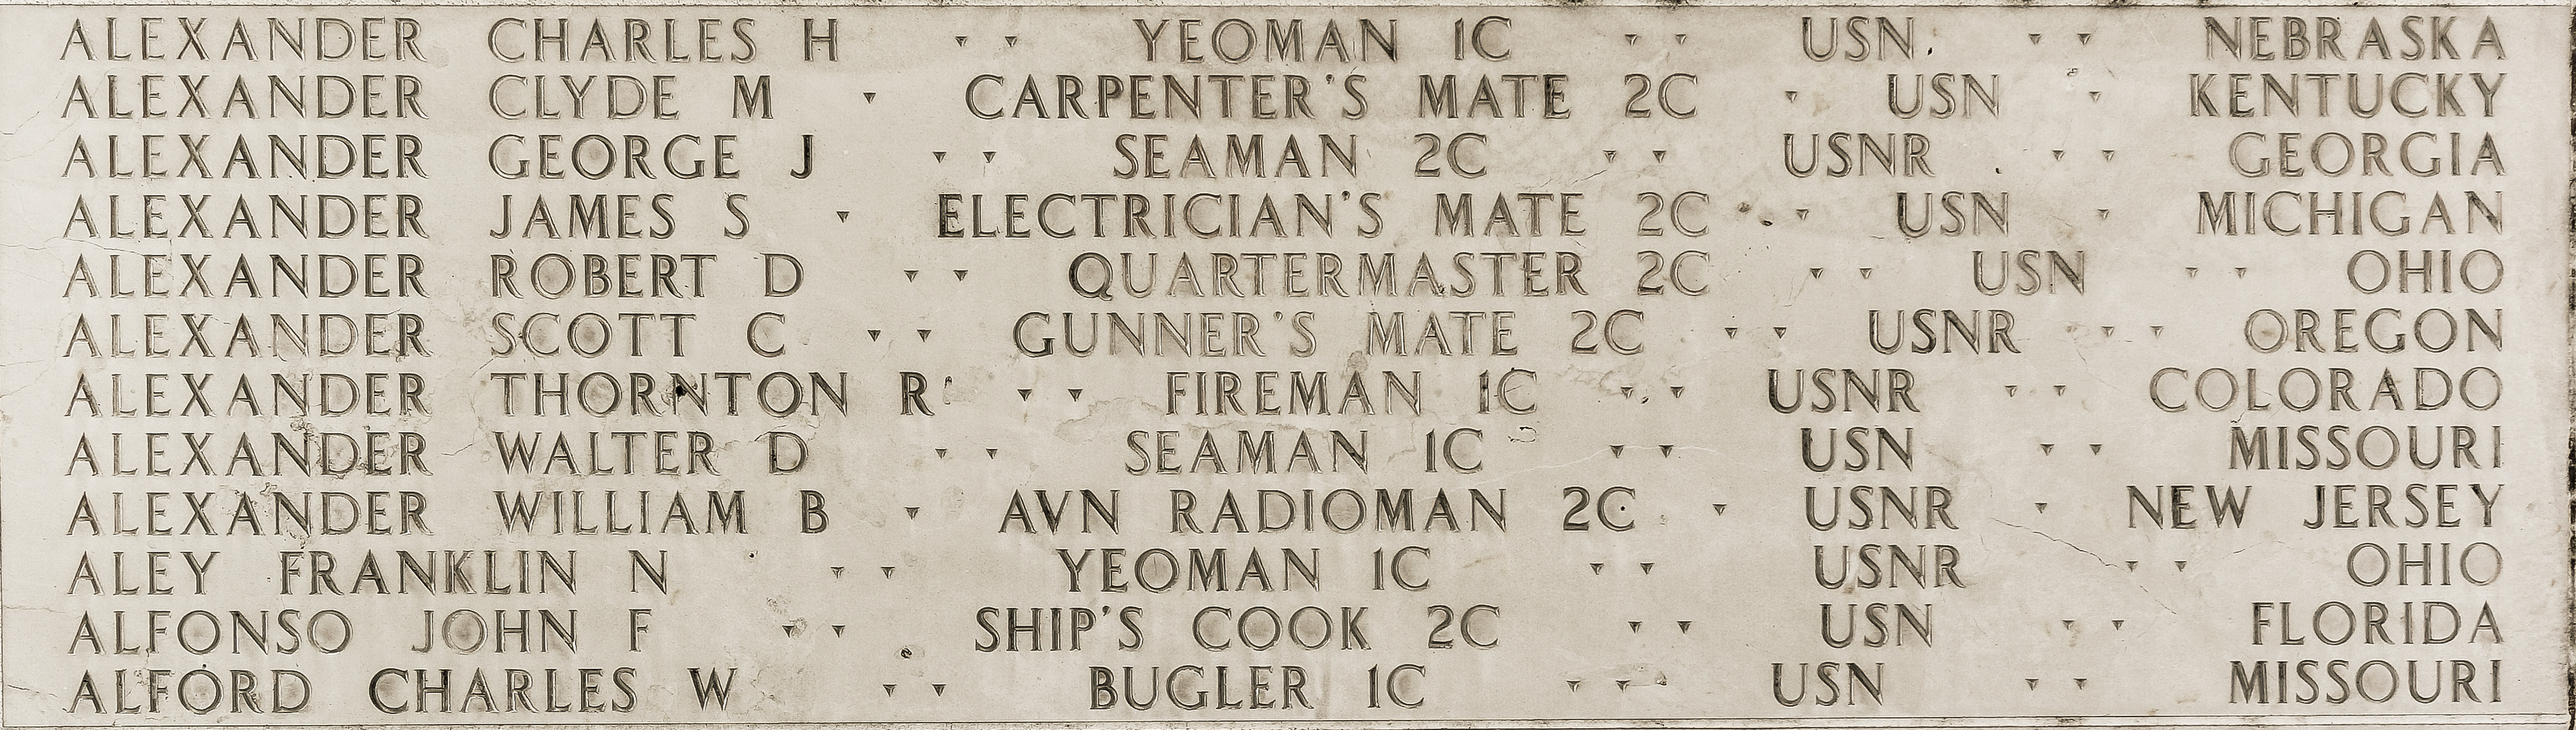 Charles H. Alexander, Yeoman First Class